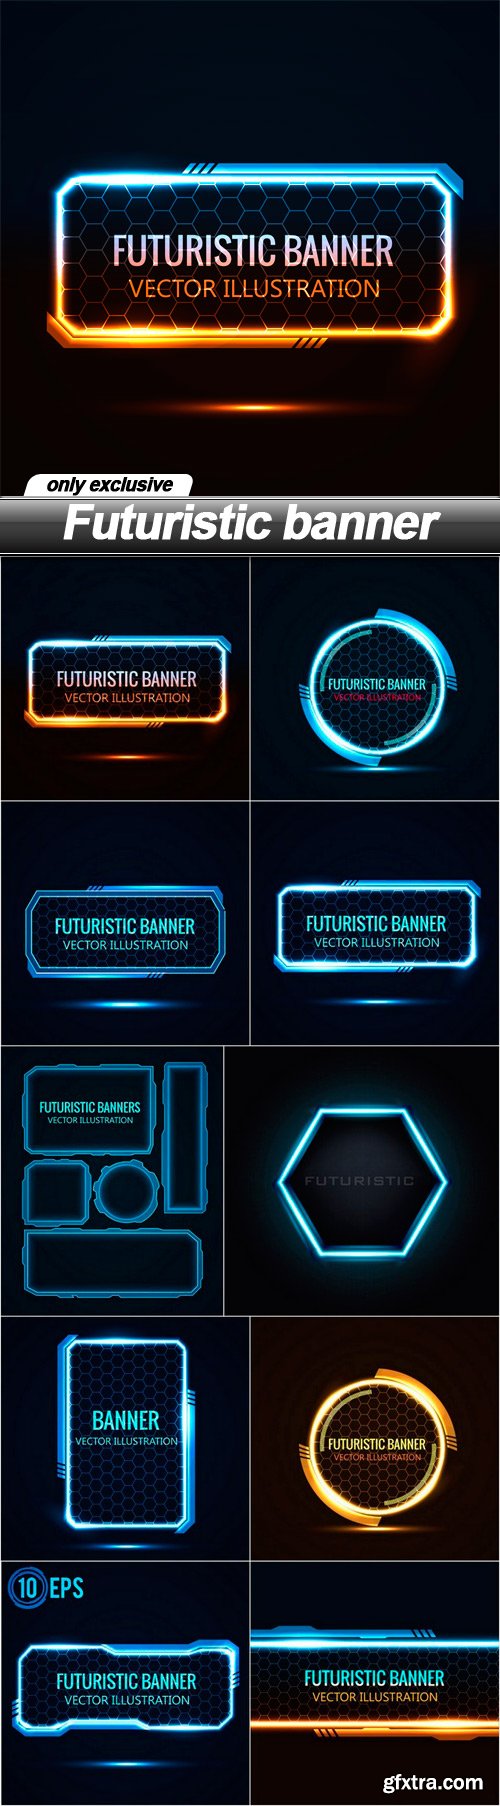 Futuristic banner - 10 EPS